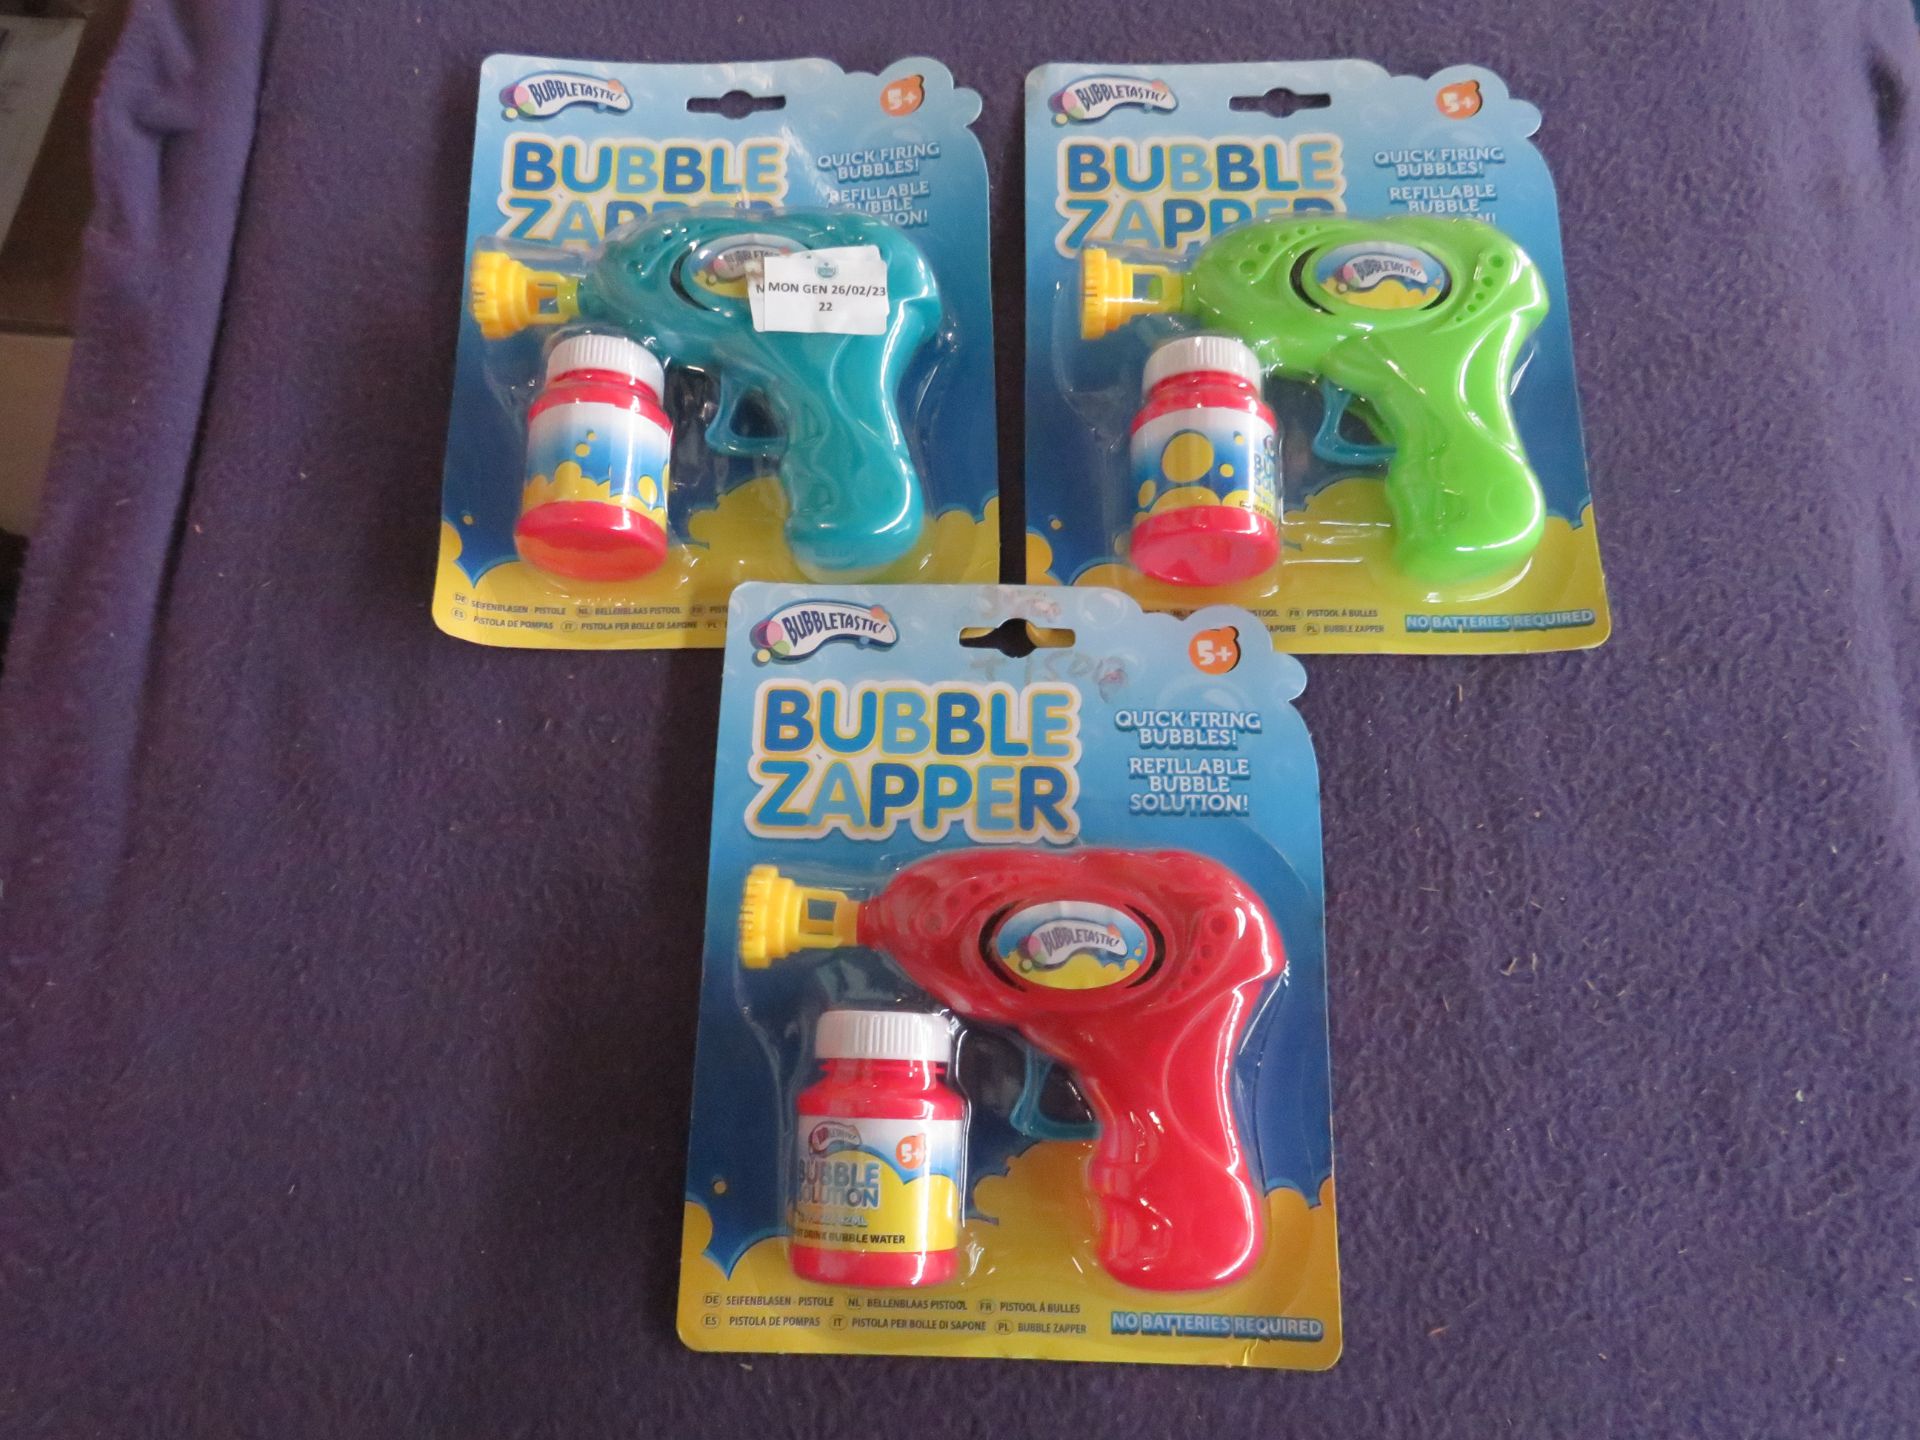 3x Bubbletastic - Bubble Zapper - Packaged.